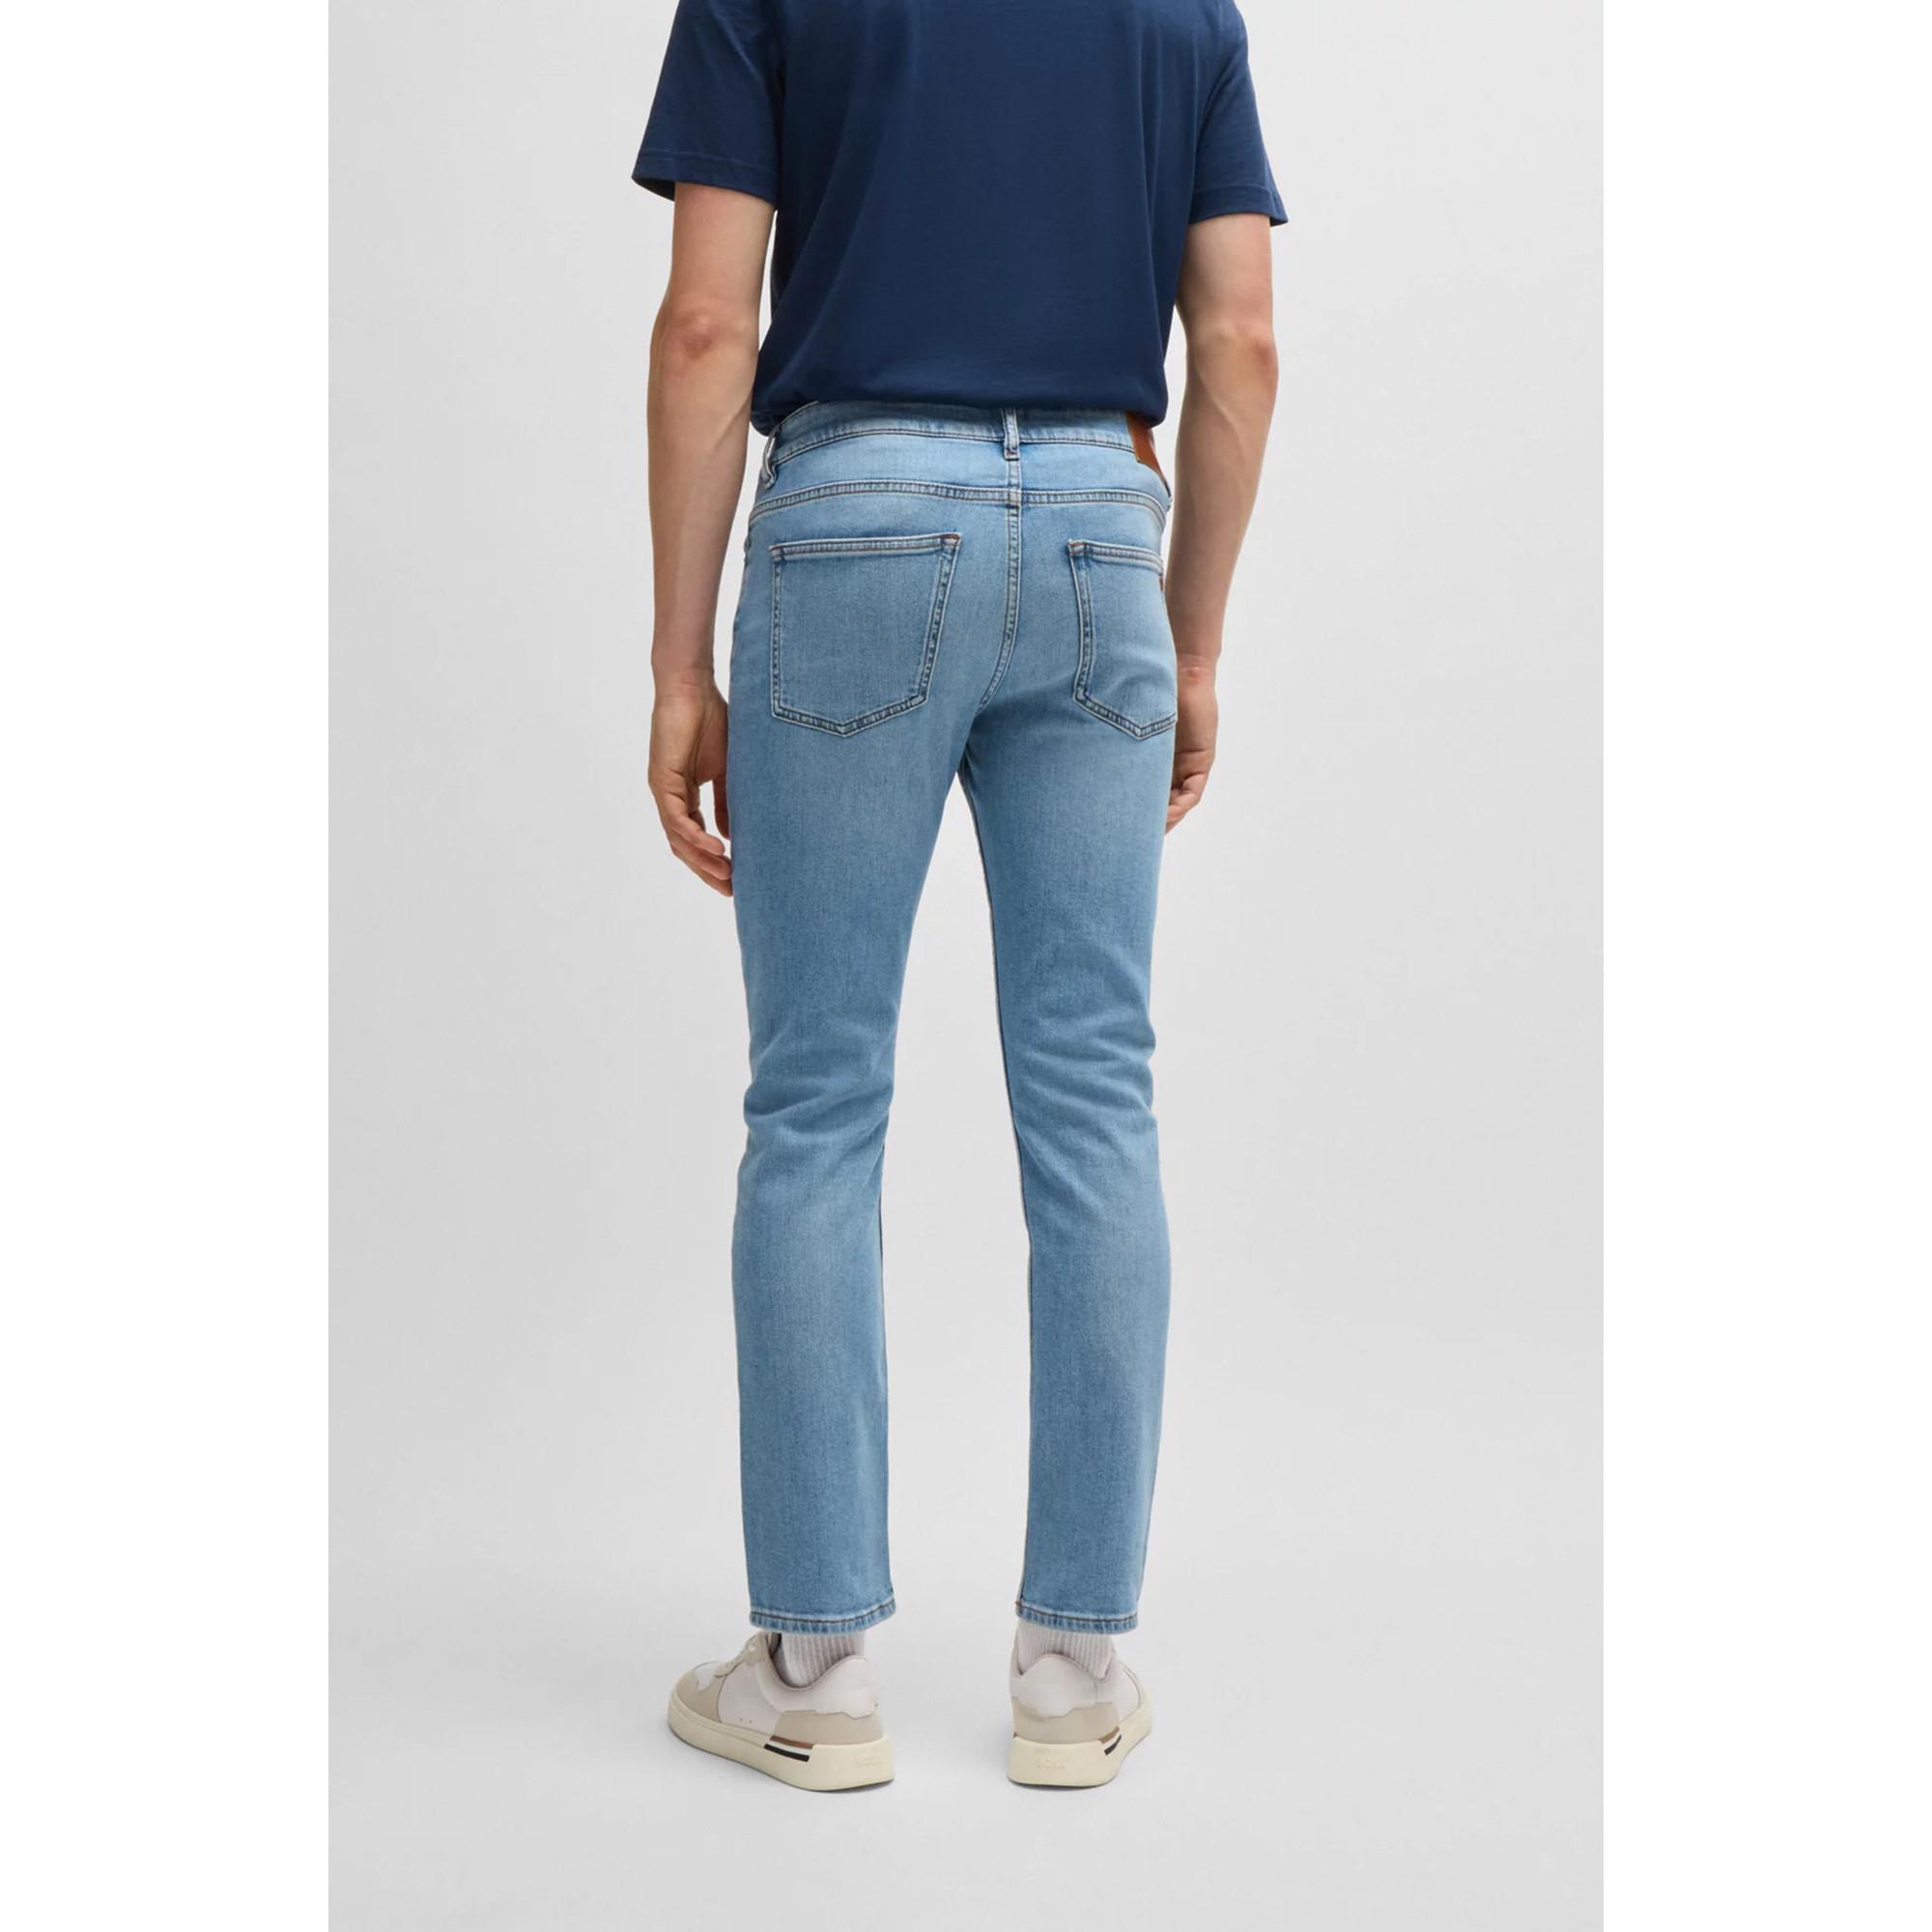 BOSS ORANGE DELAWARE HORZION Jeans, Slim Fit 